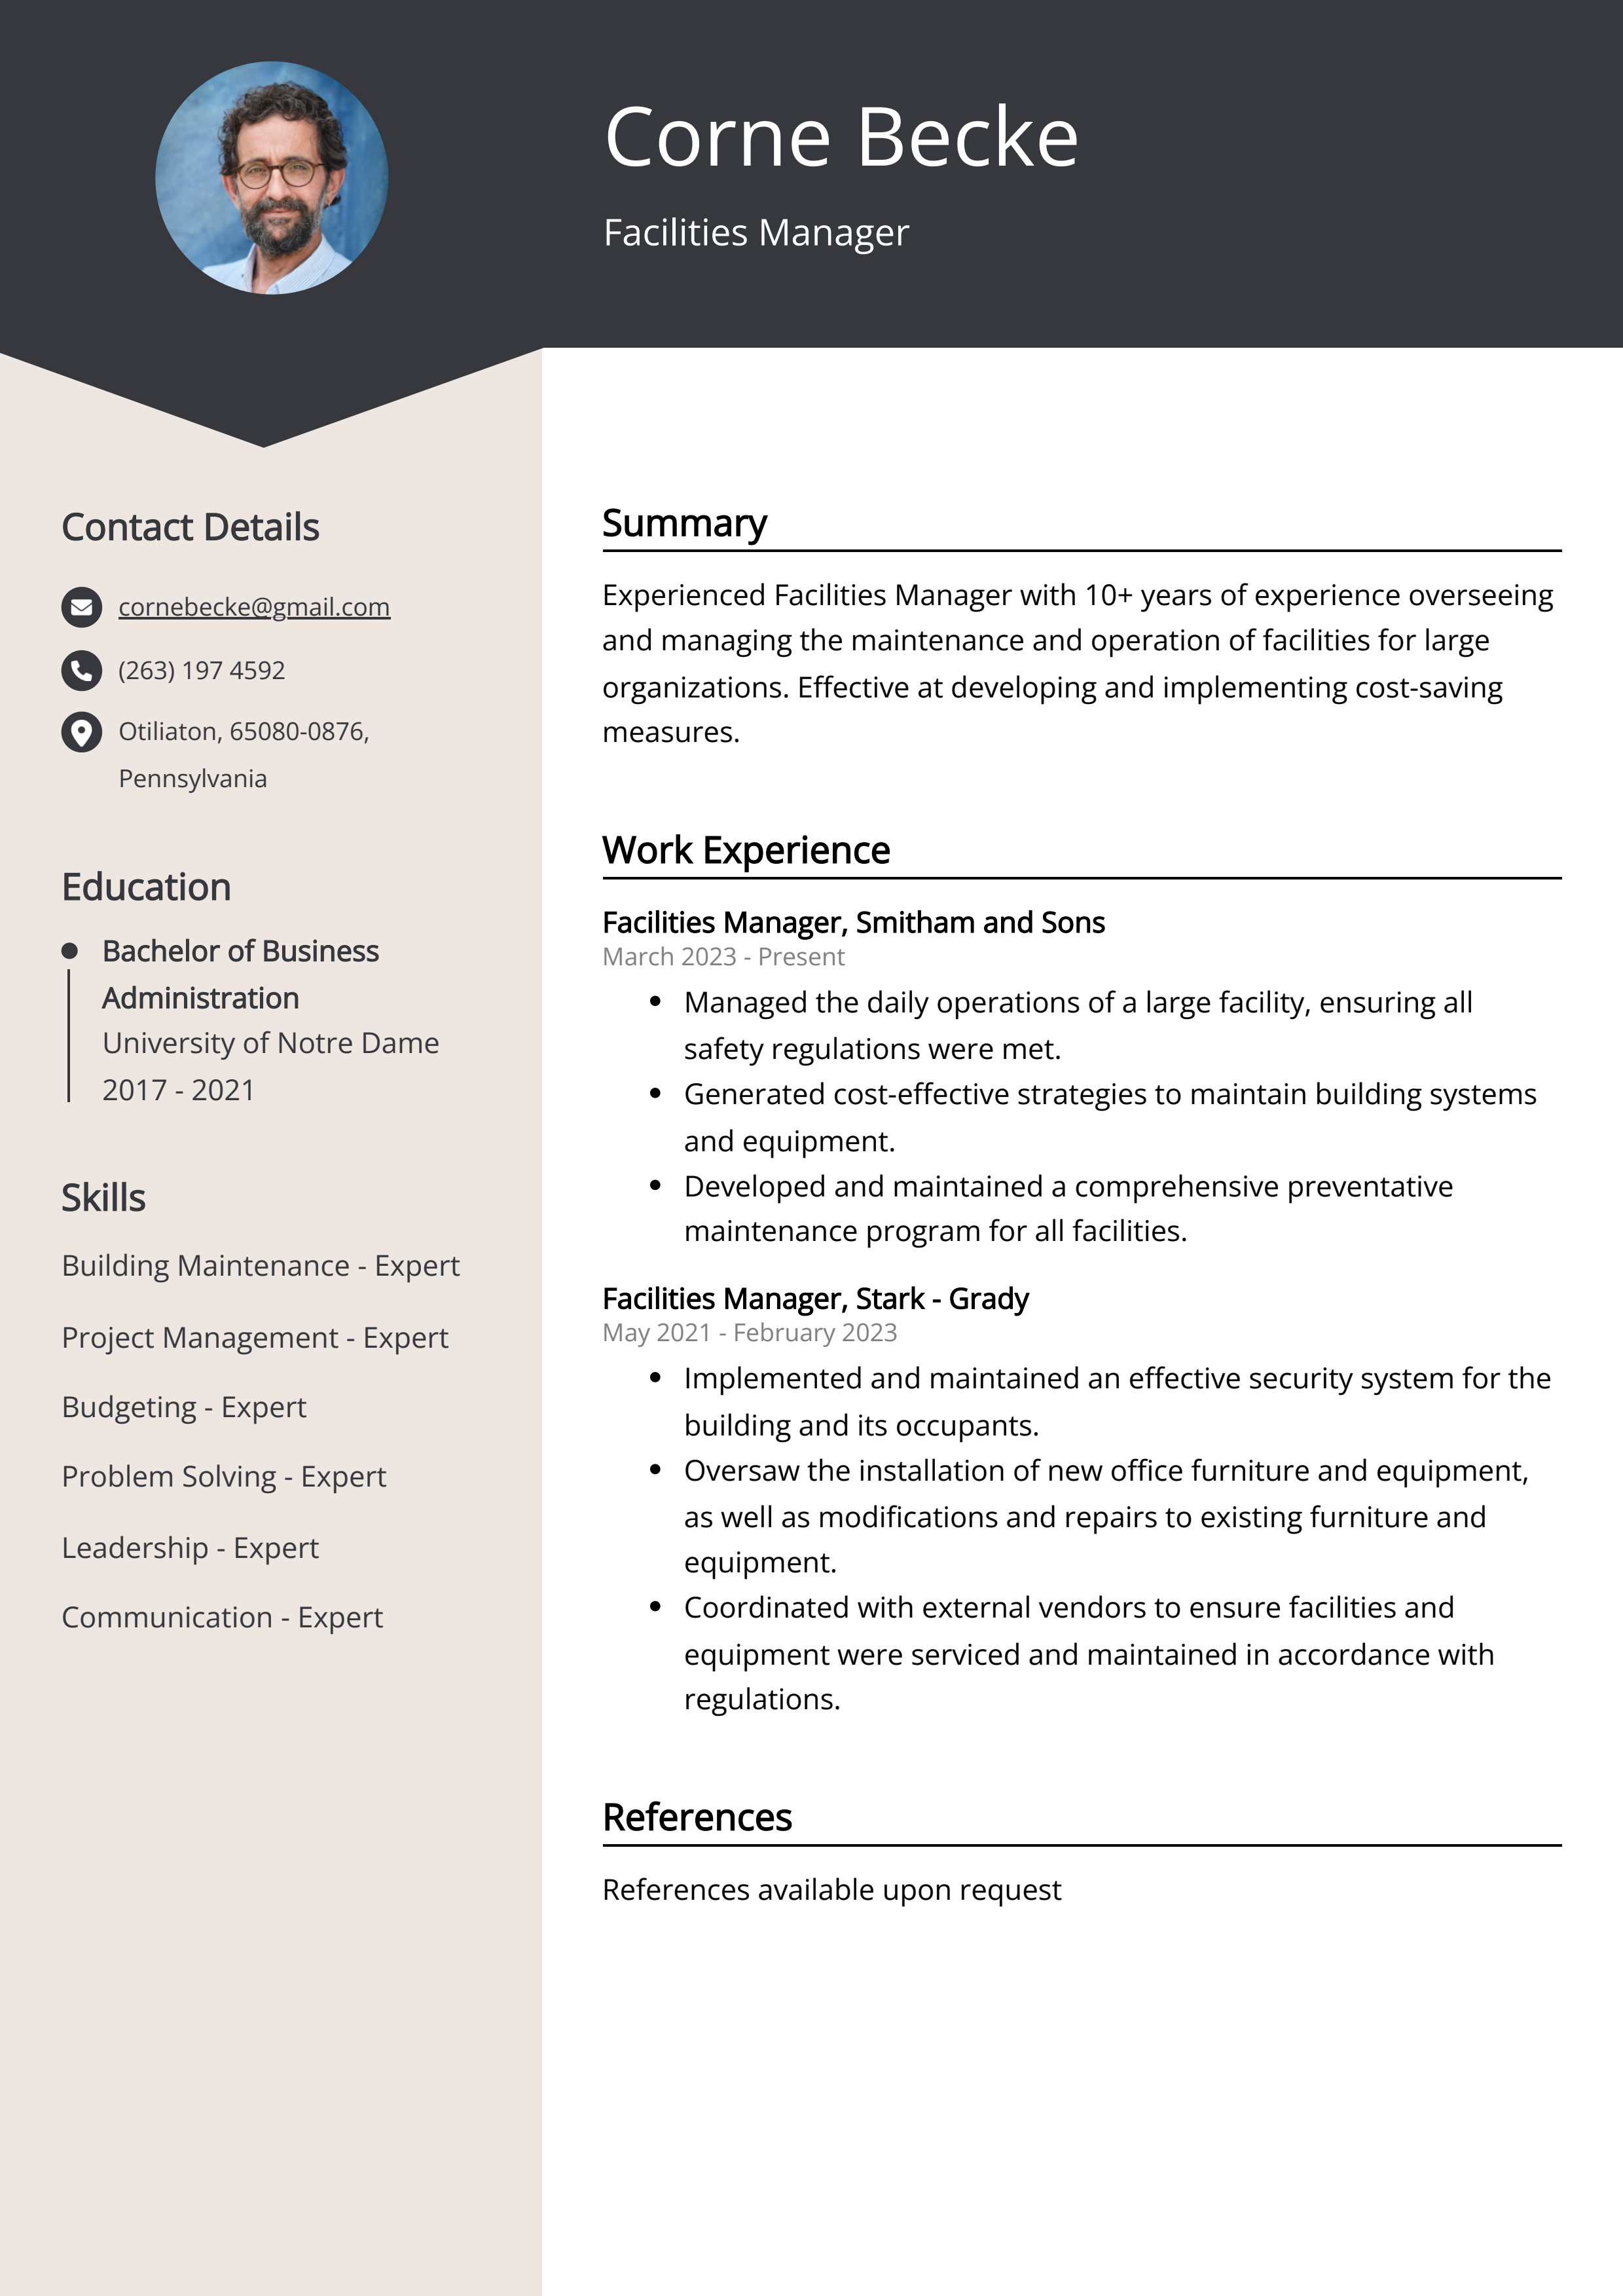 Facilities Manager CV Example